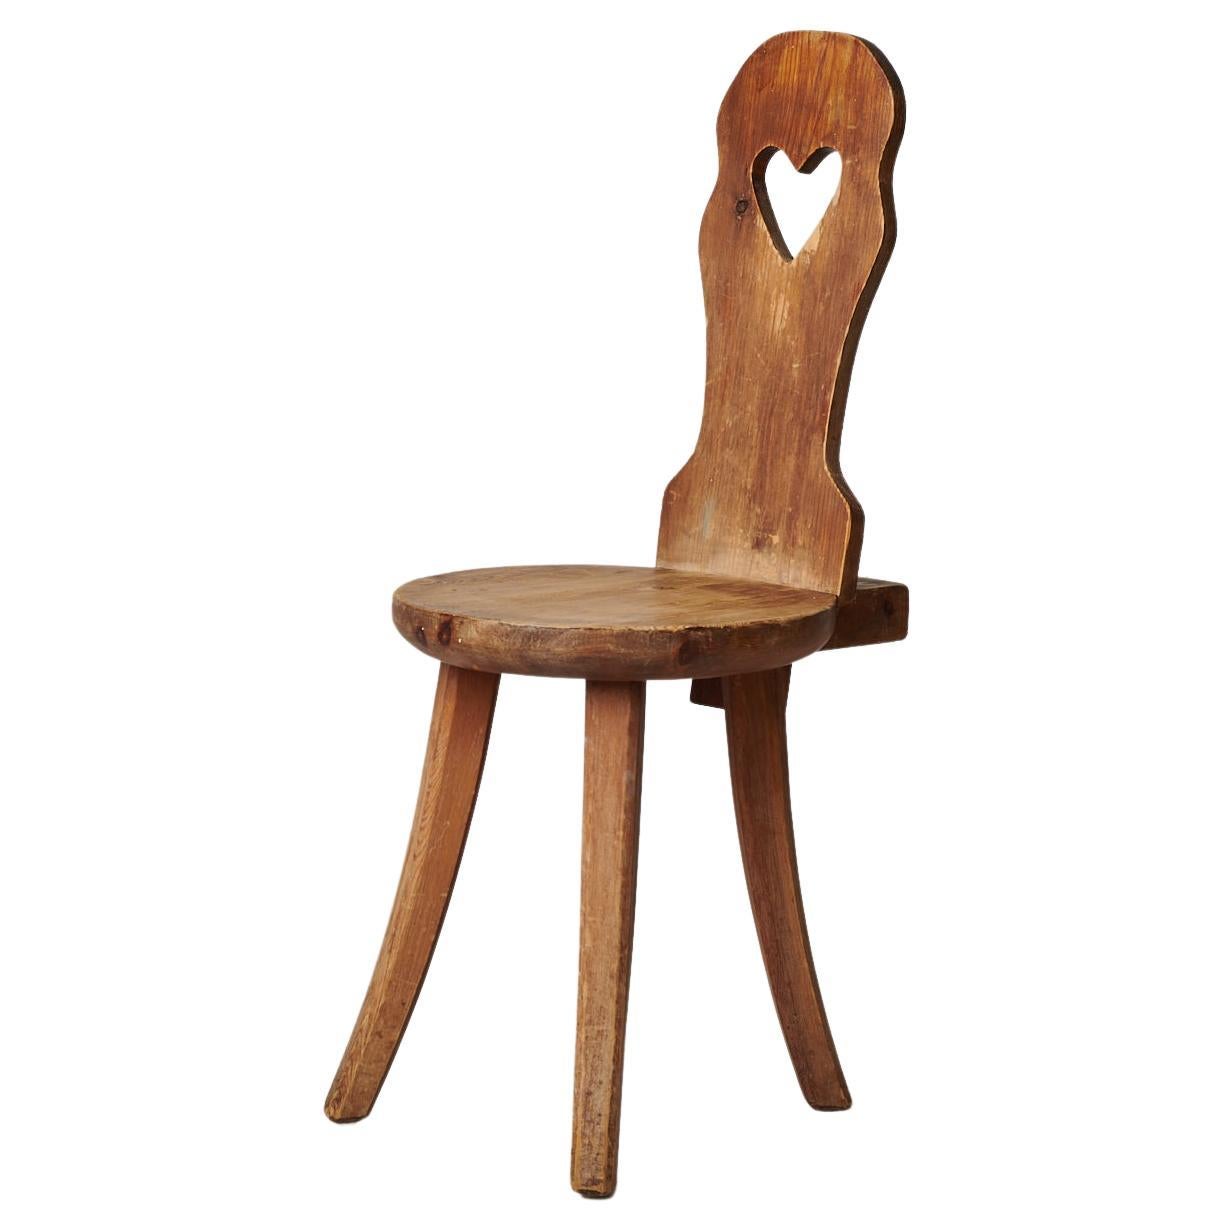 Antique Swedish Folk Art Rustic Pine Chair For Sale